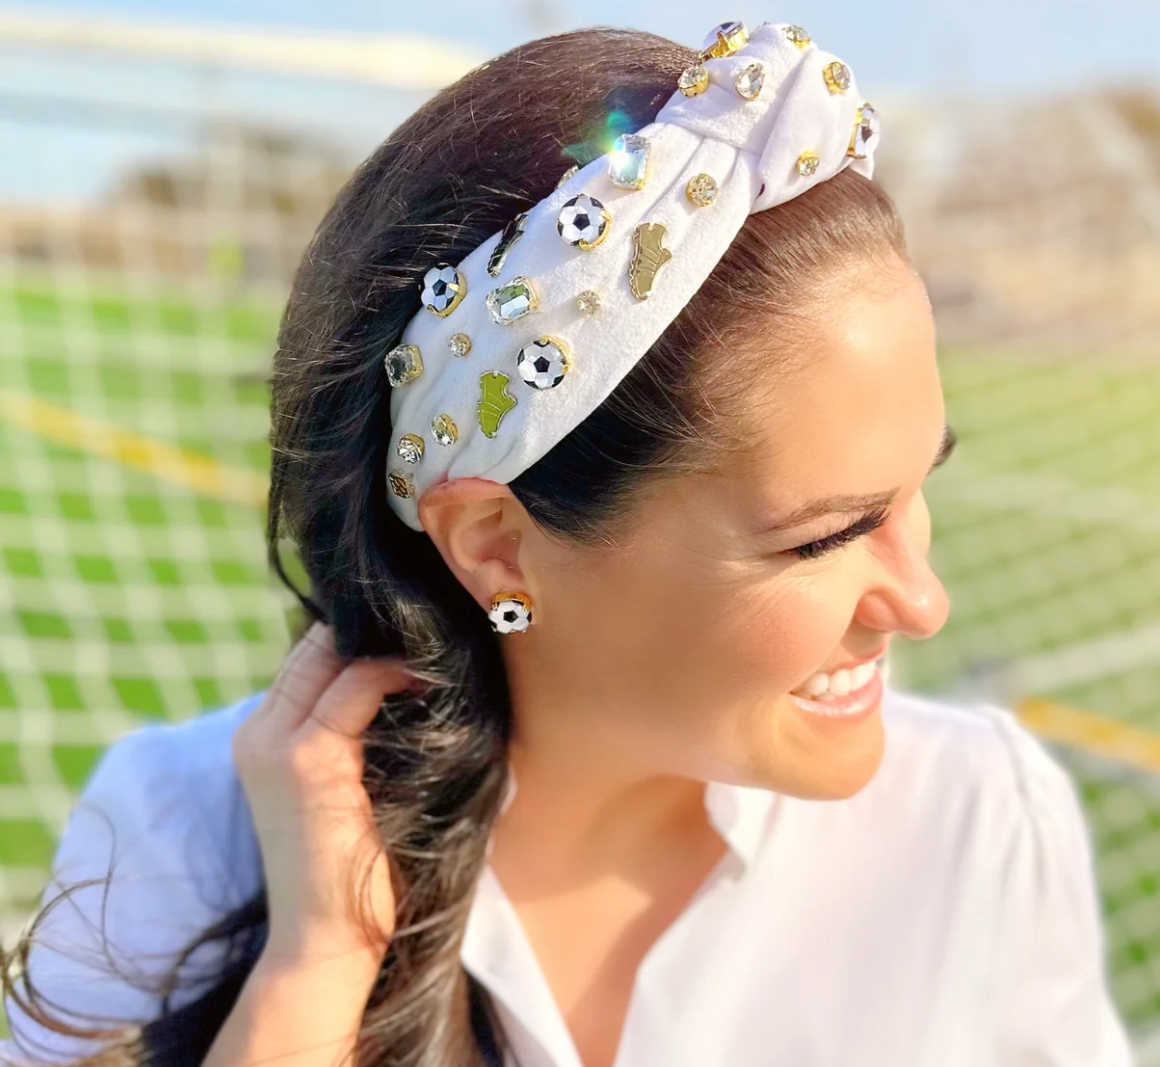 Brianna Cannon | Soccer Headband